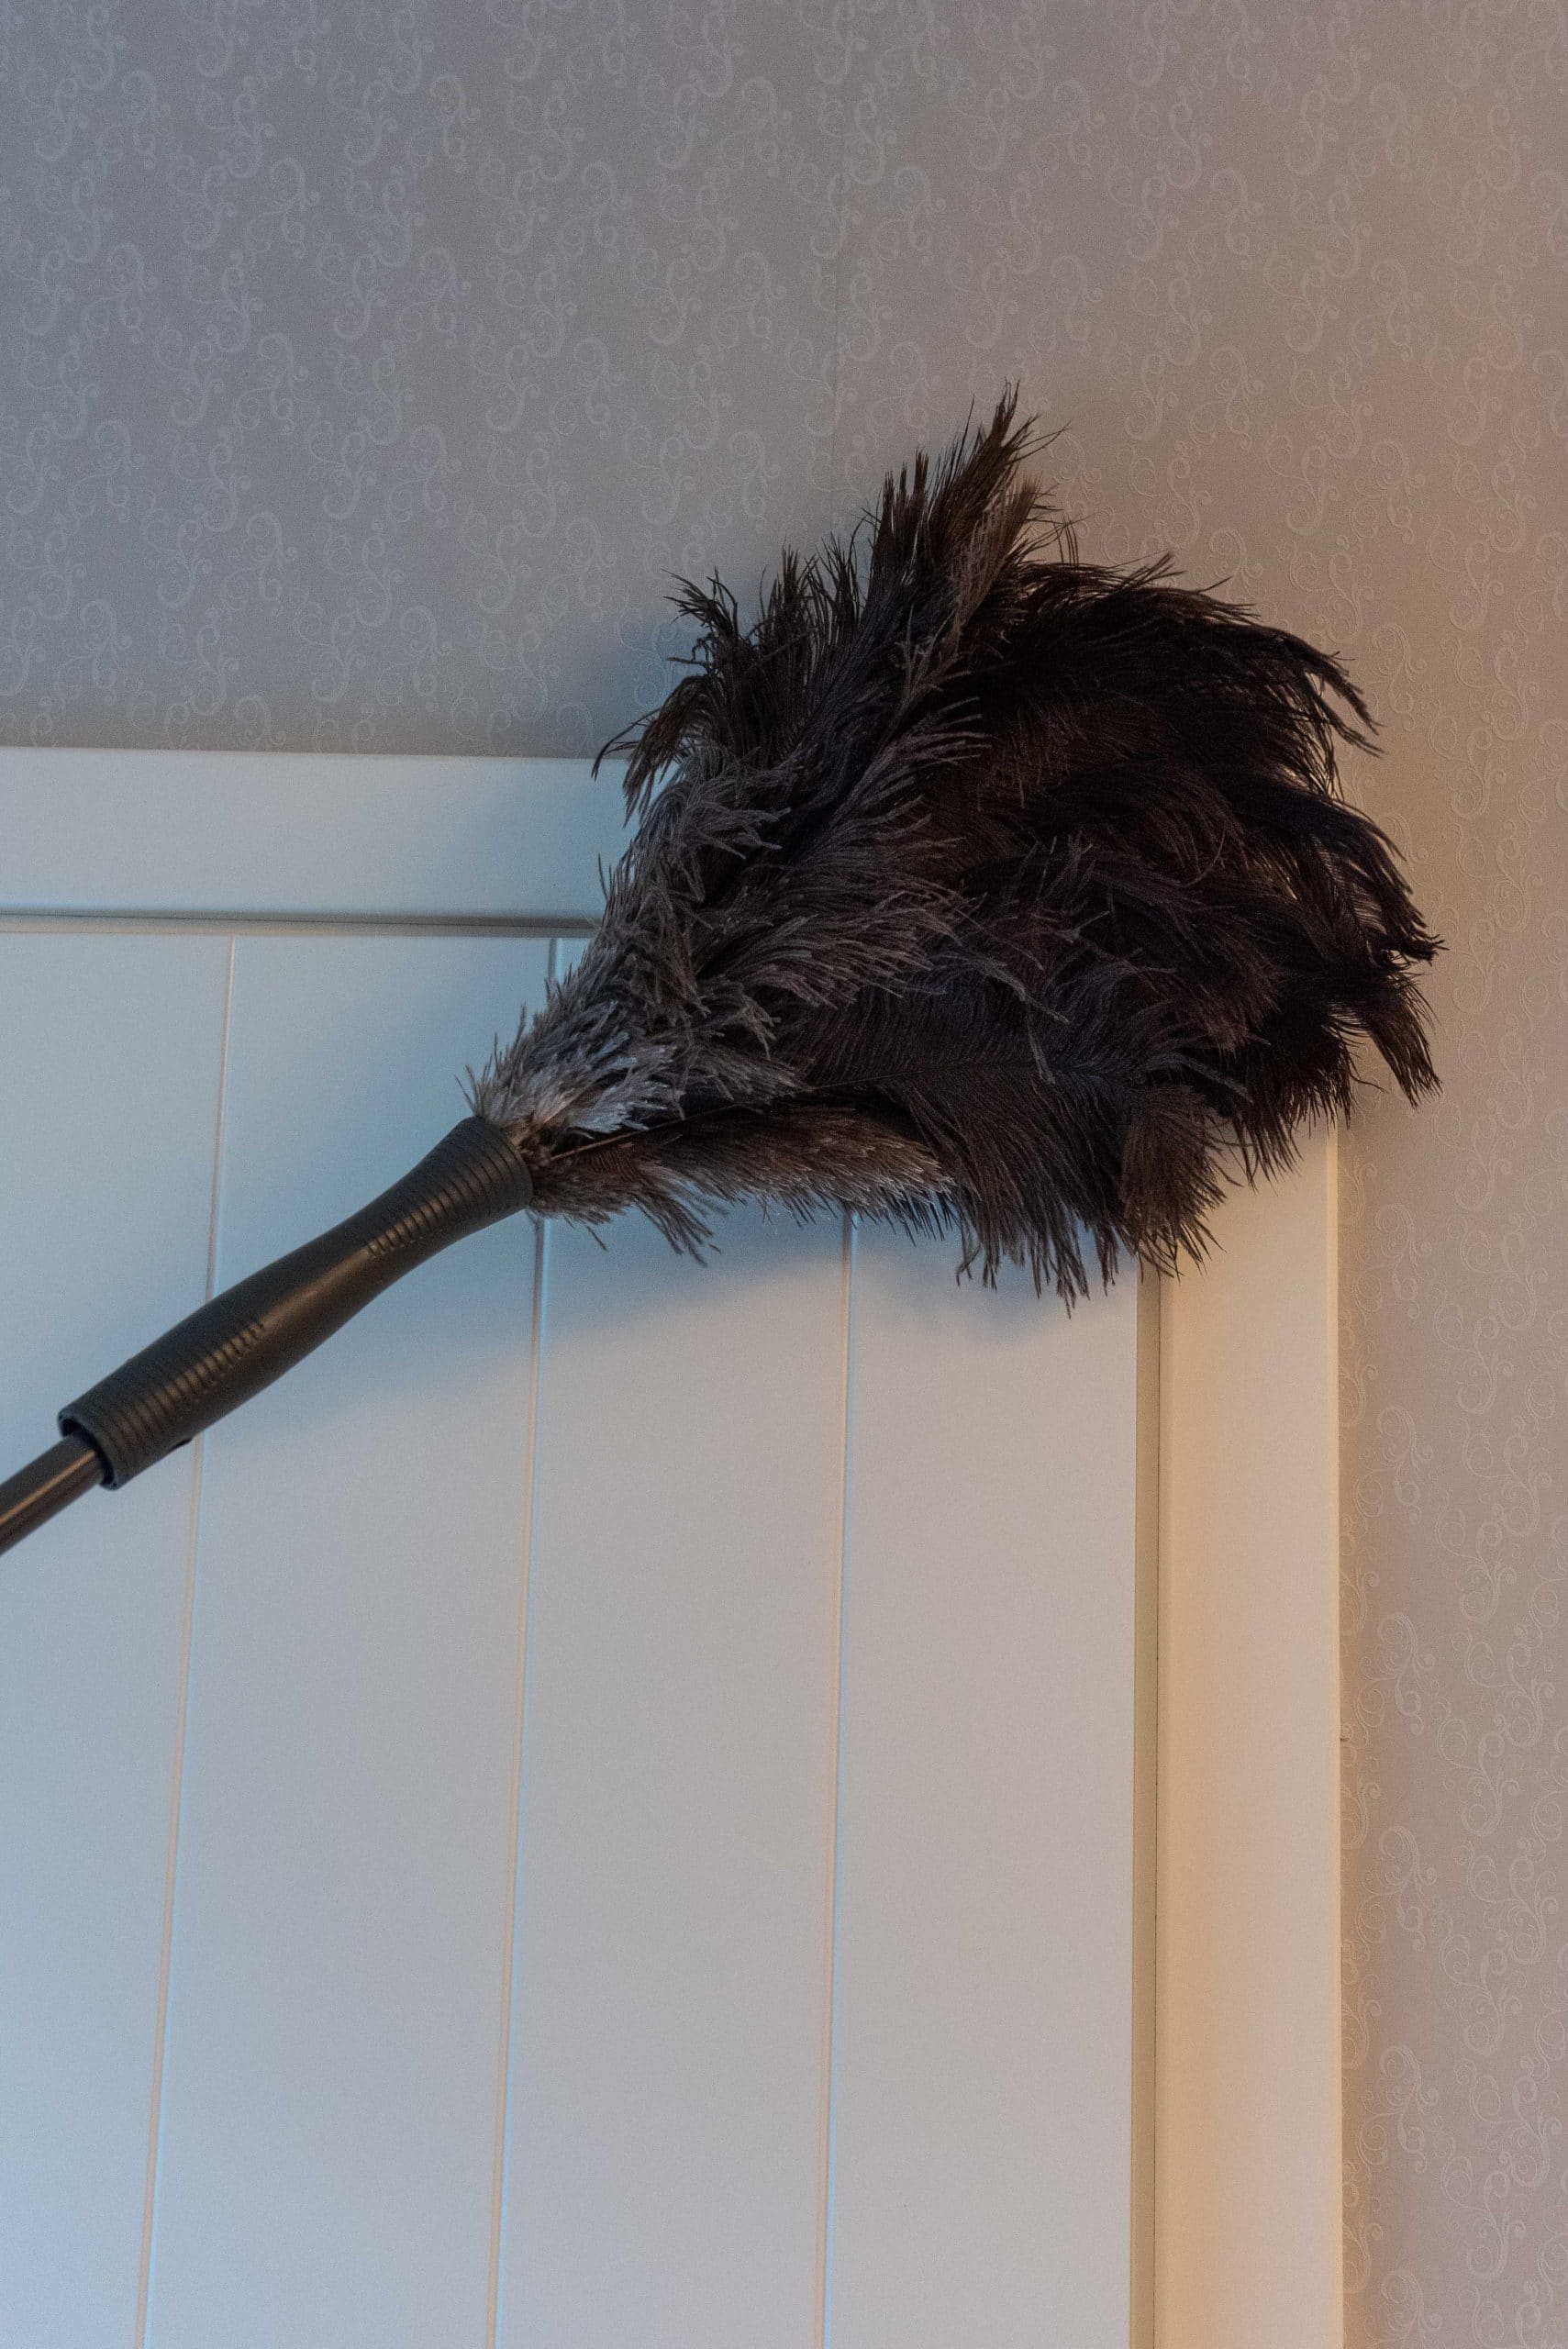 RDI Premium Black Ostrich Feather Duster - 20